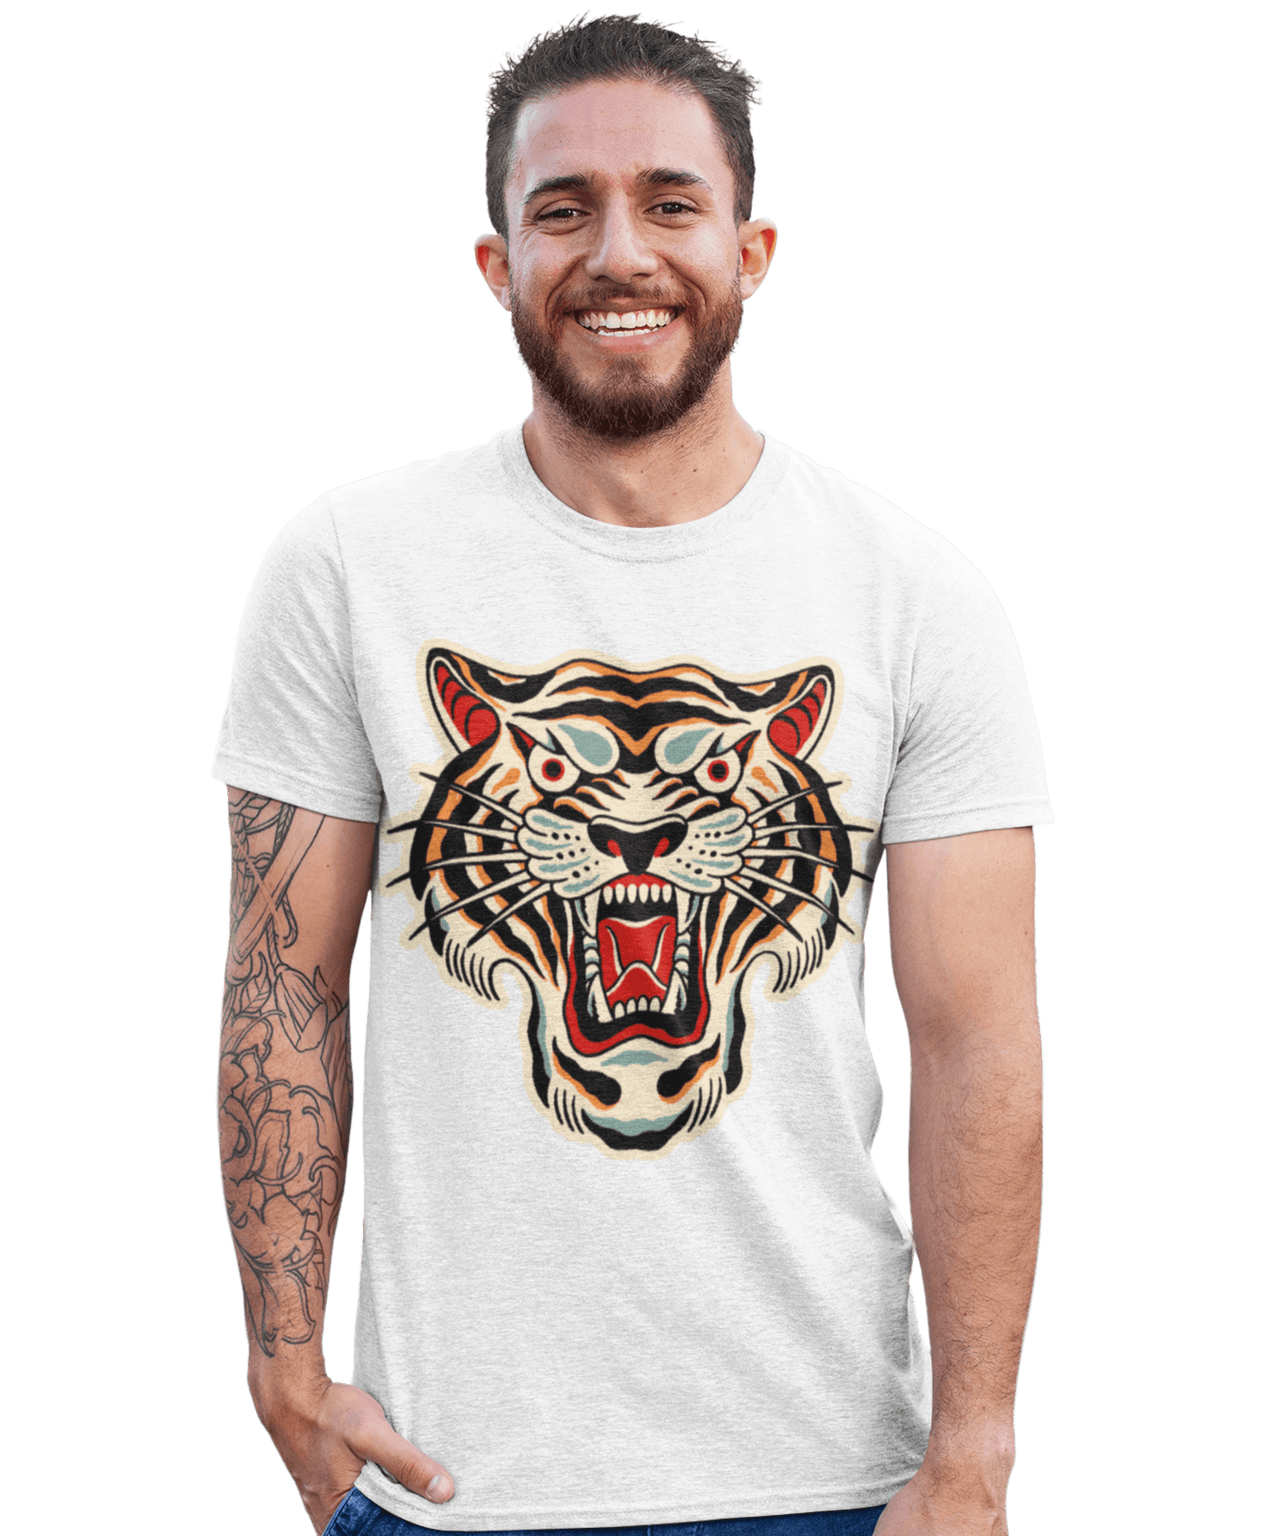 Tiger Tattoo Design Adult Unisex Unisex T-Shirt For Men And Women 8Ball